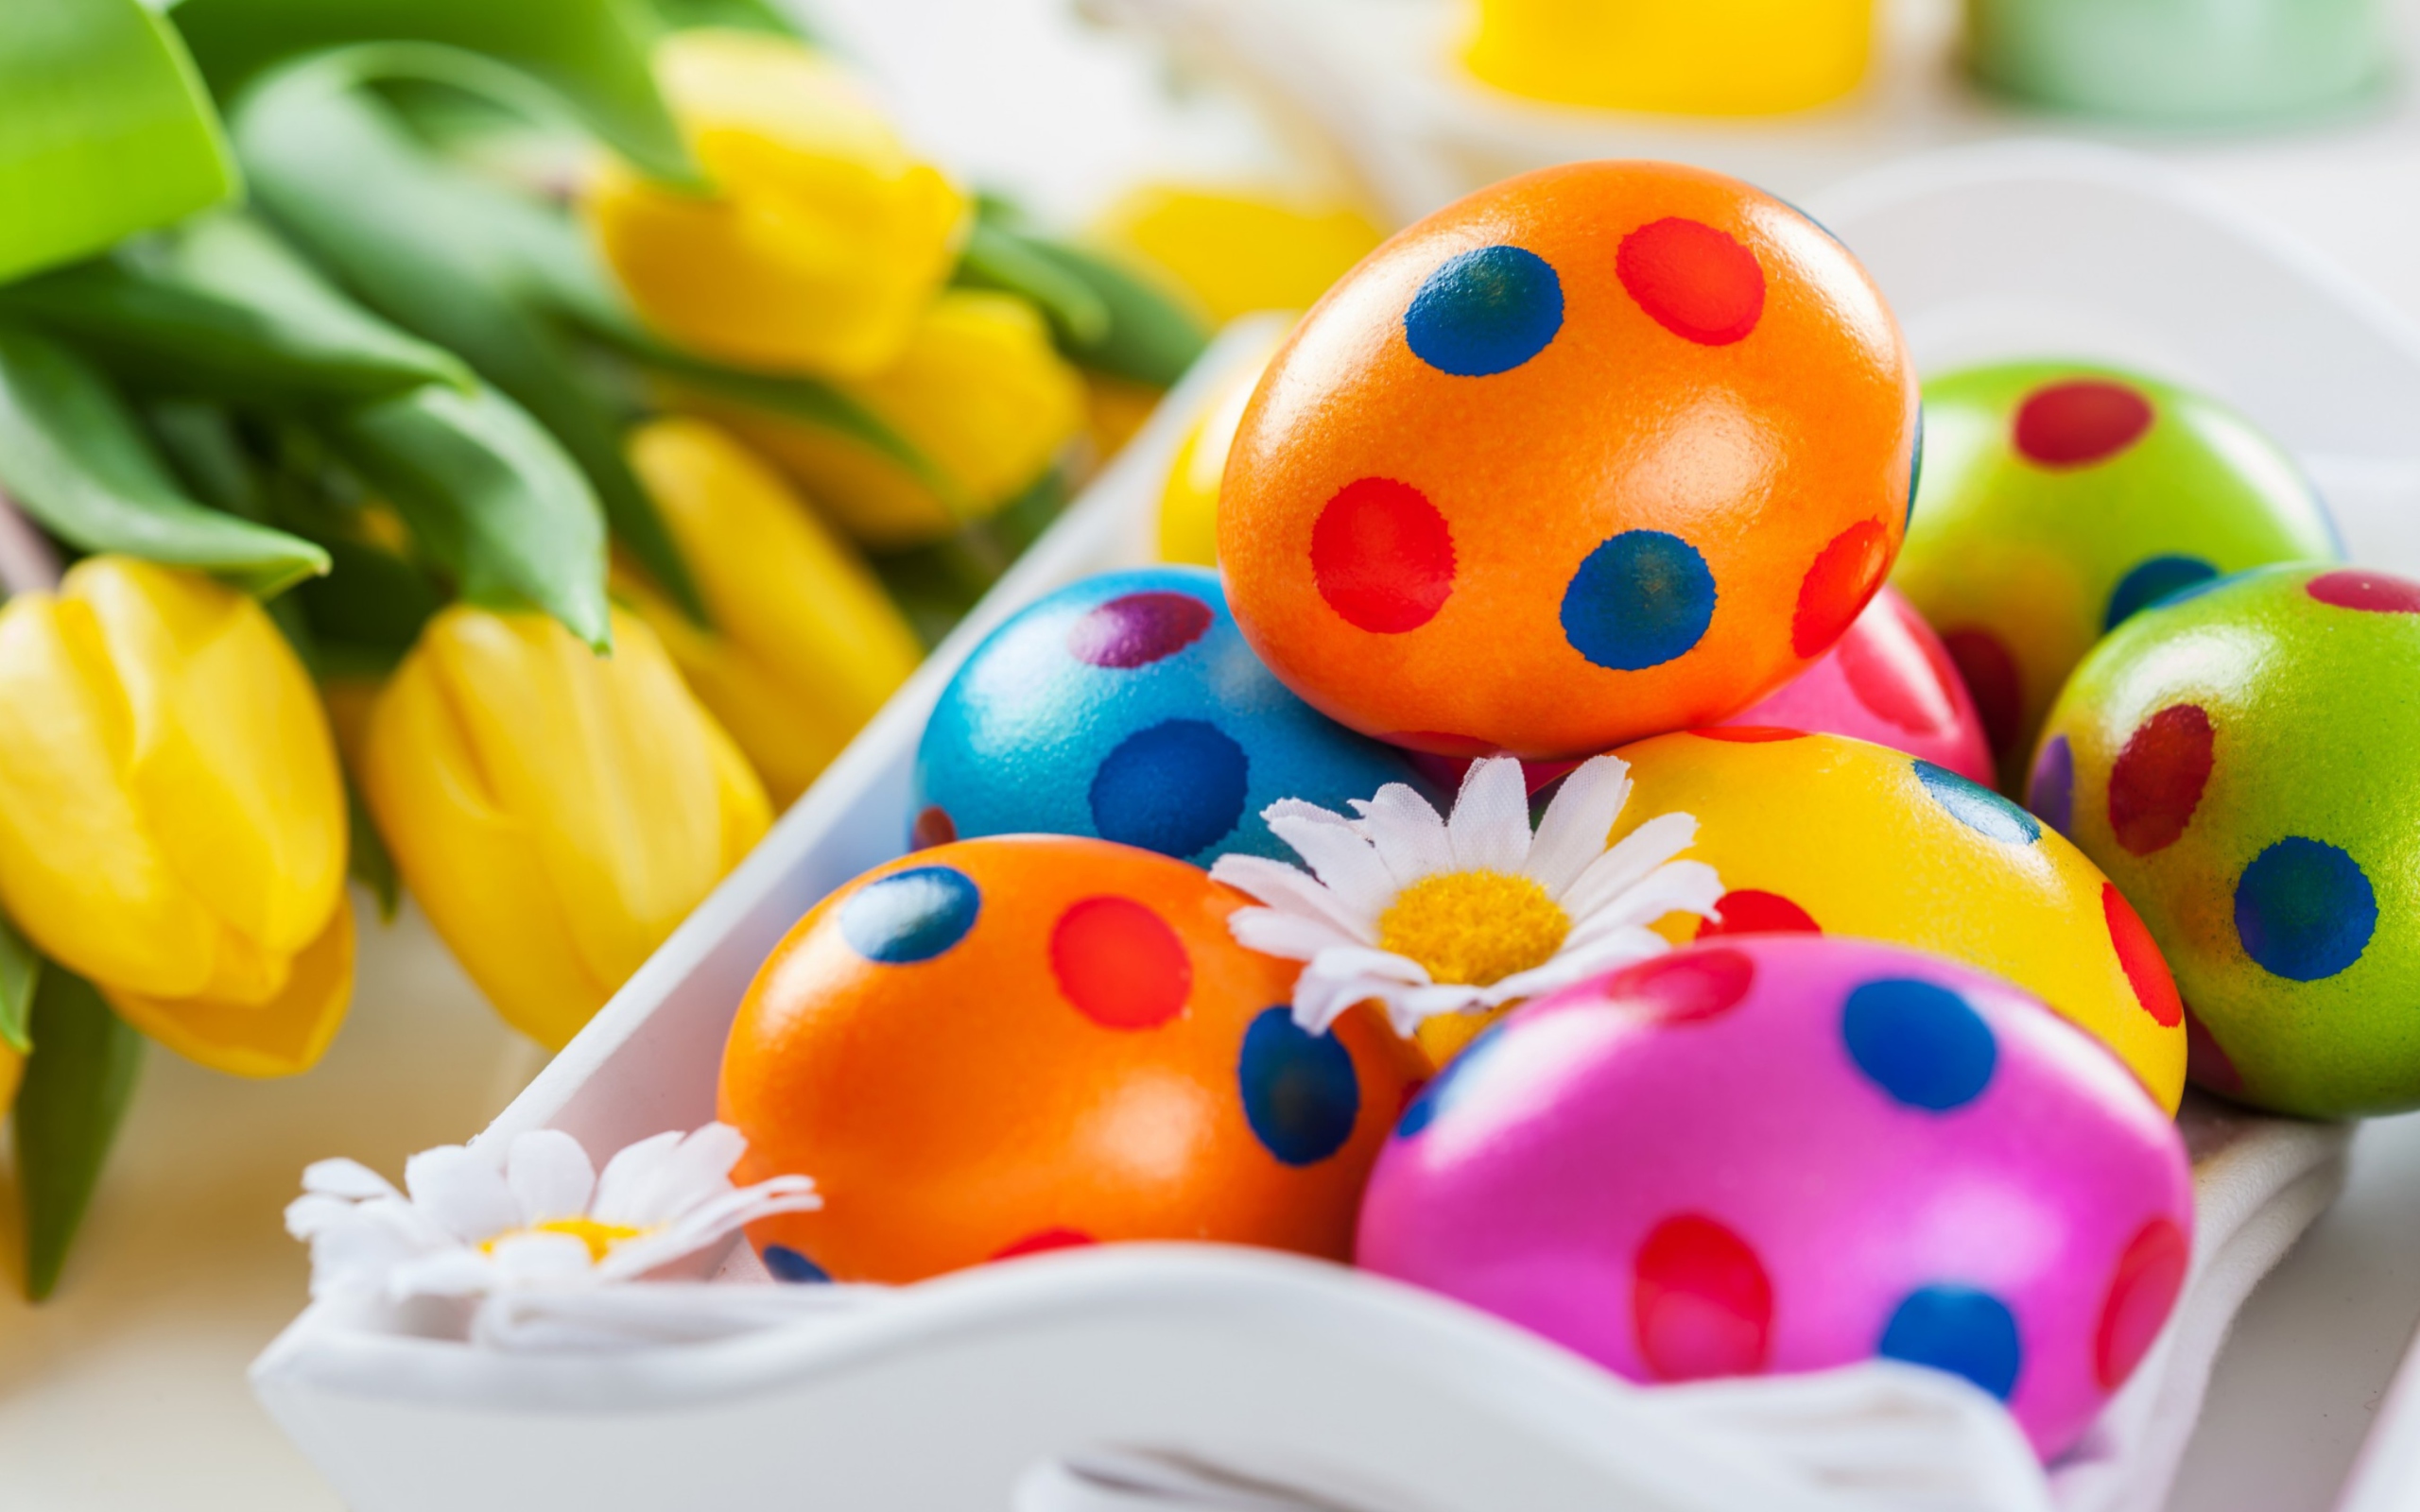 Colorful Polka Dot Easter Eggs wallpaper 2560x1600